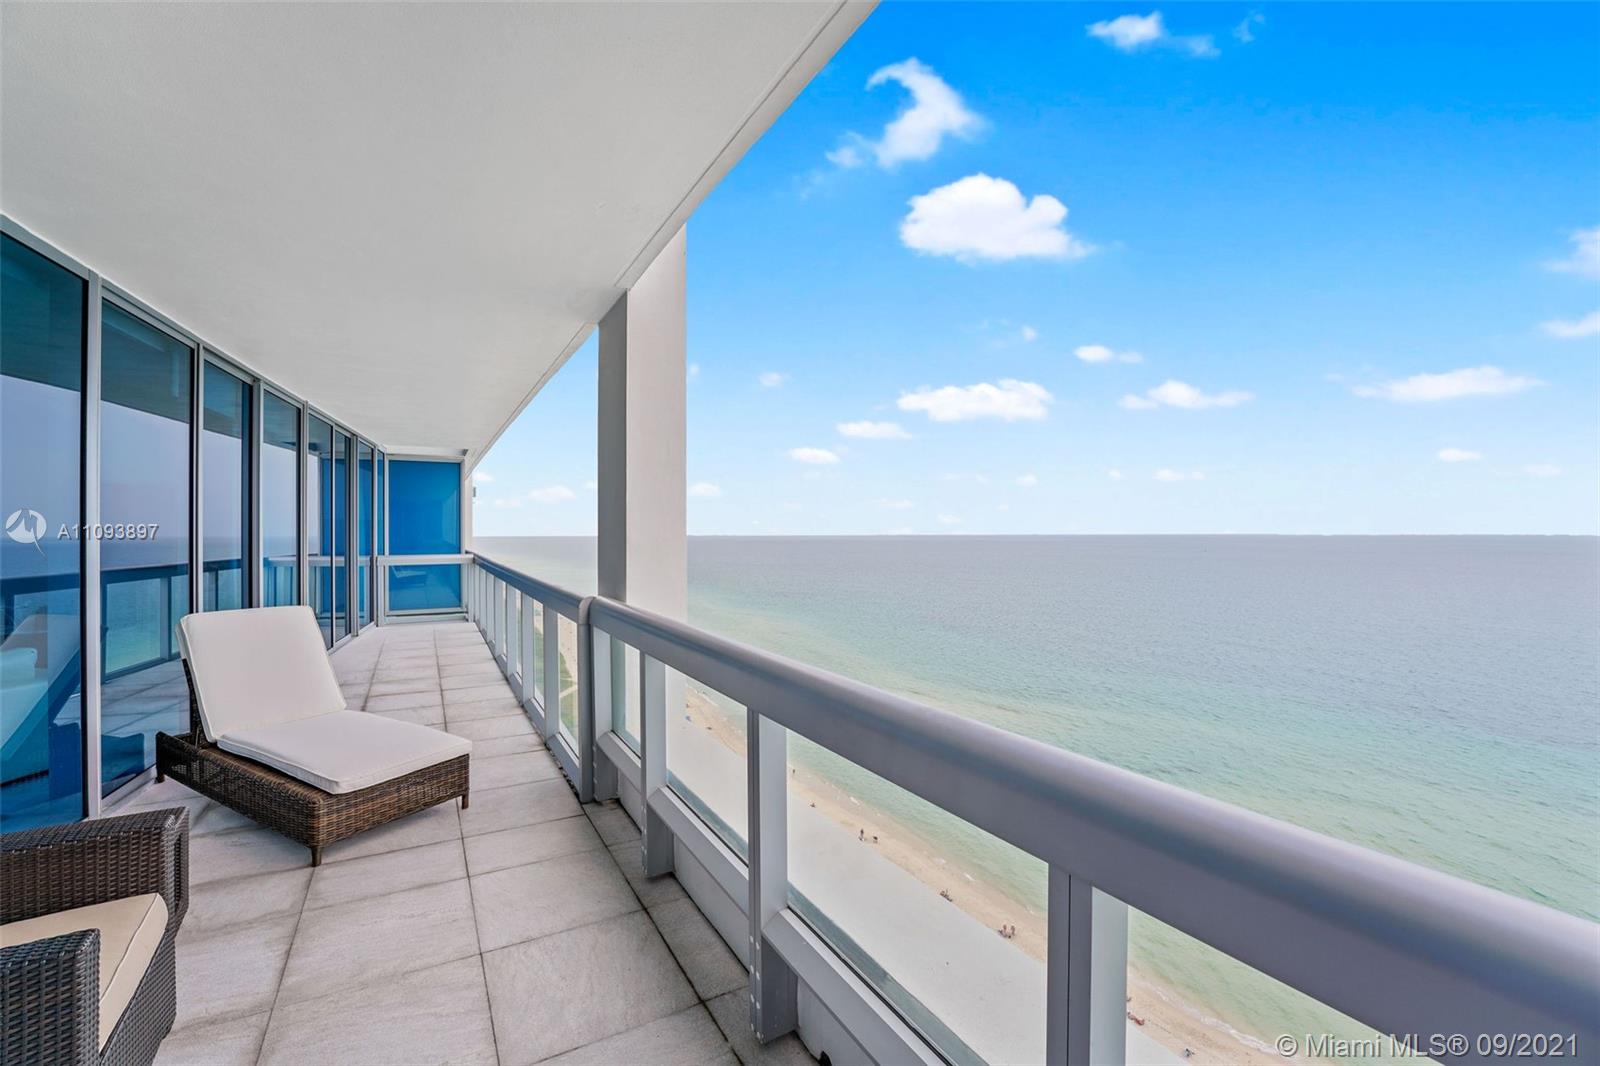 South Florida Residences For Sale, Miami Beach Luxury Real Estate ...